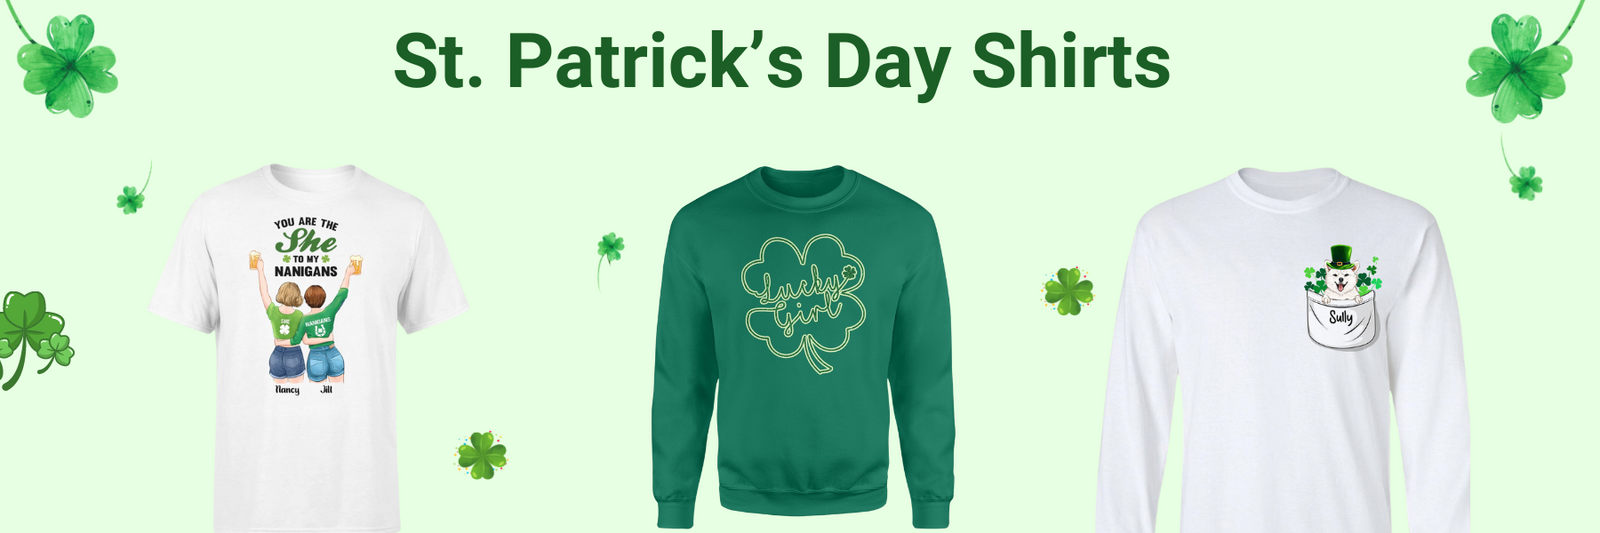 Most Likely to Start Shenanigans Shamrock Shirt, Glitter St. Pats Tee, St  Patricks Day Shirt, Glitter Lucky Shirt, Lucky Tee, Irish Shirt, 